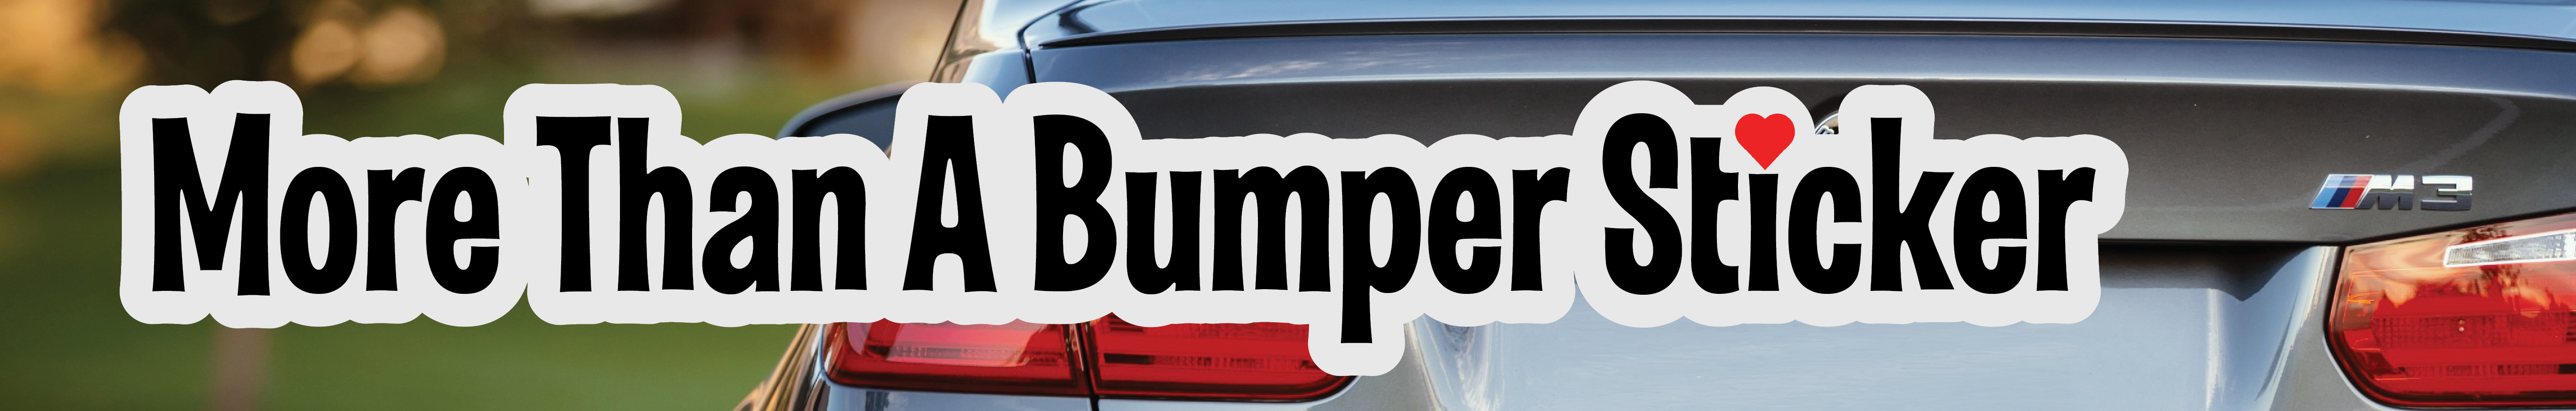 Beyond The Bumper Sticker